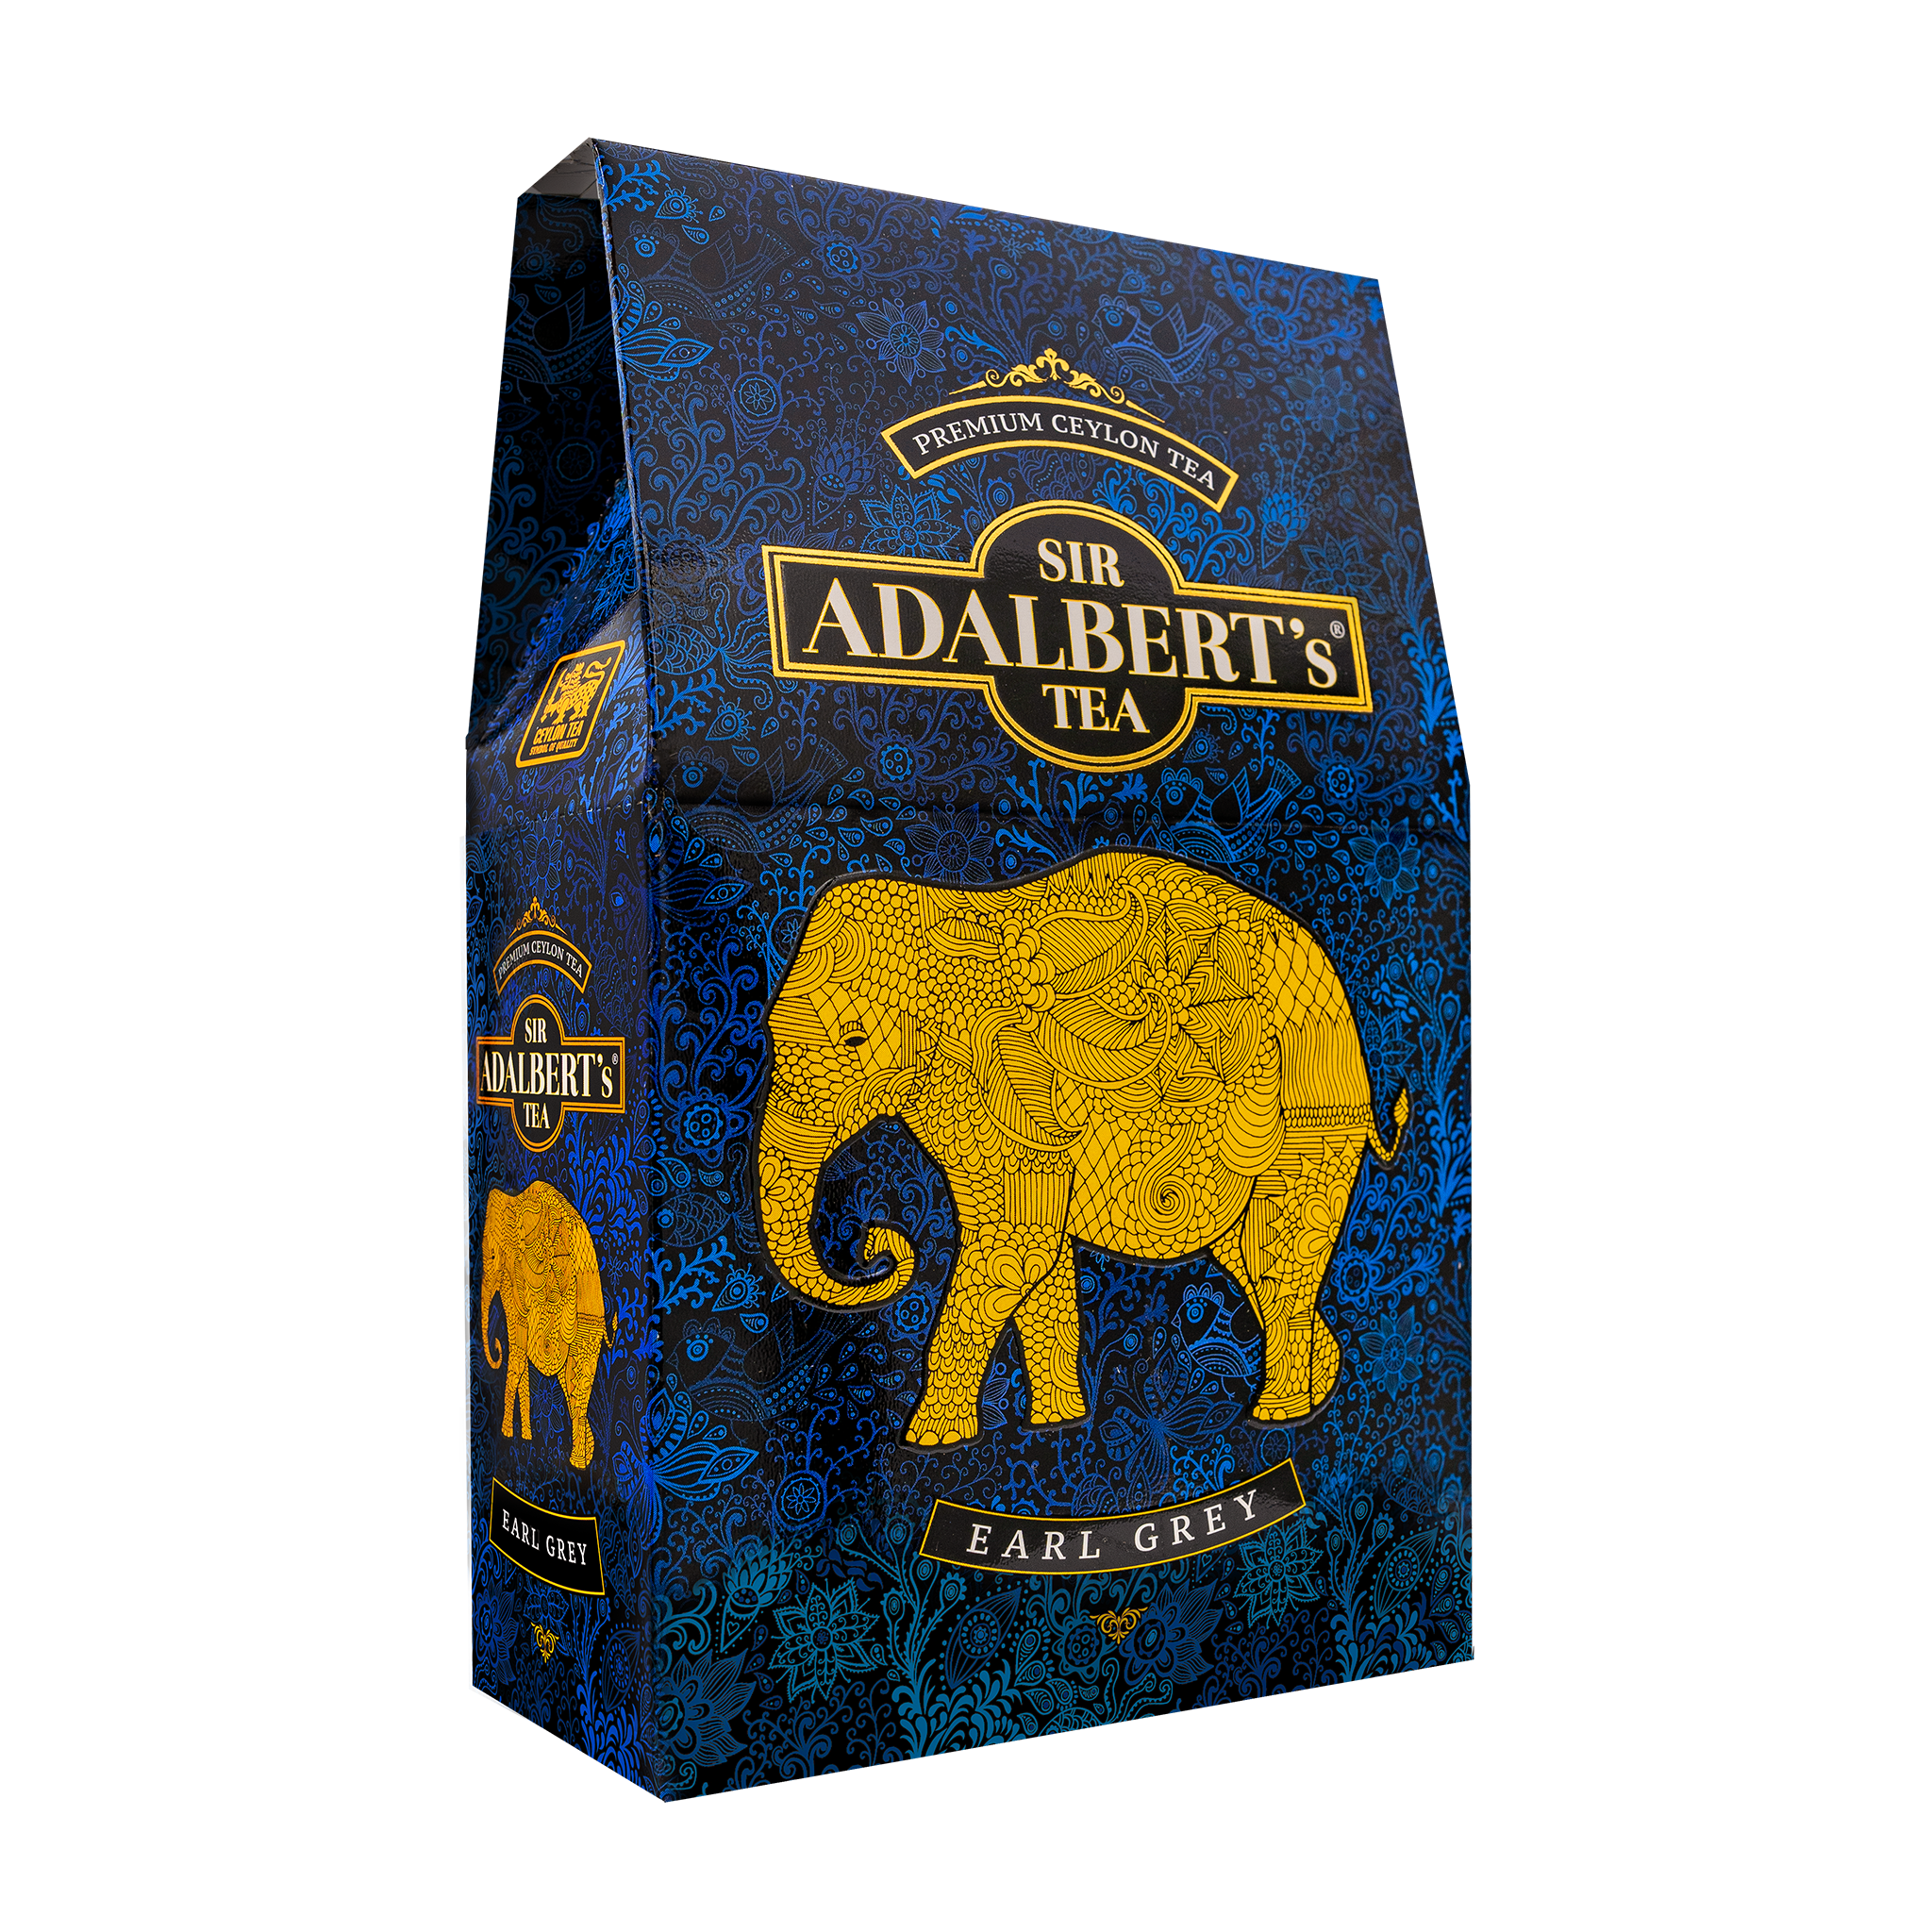 Adalbert's Tea EARL GREY - liściasta 100g pouch - Sir Adalbert's Tea